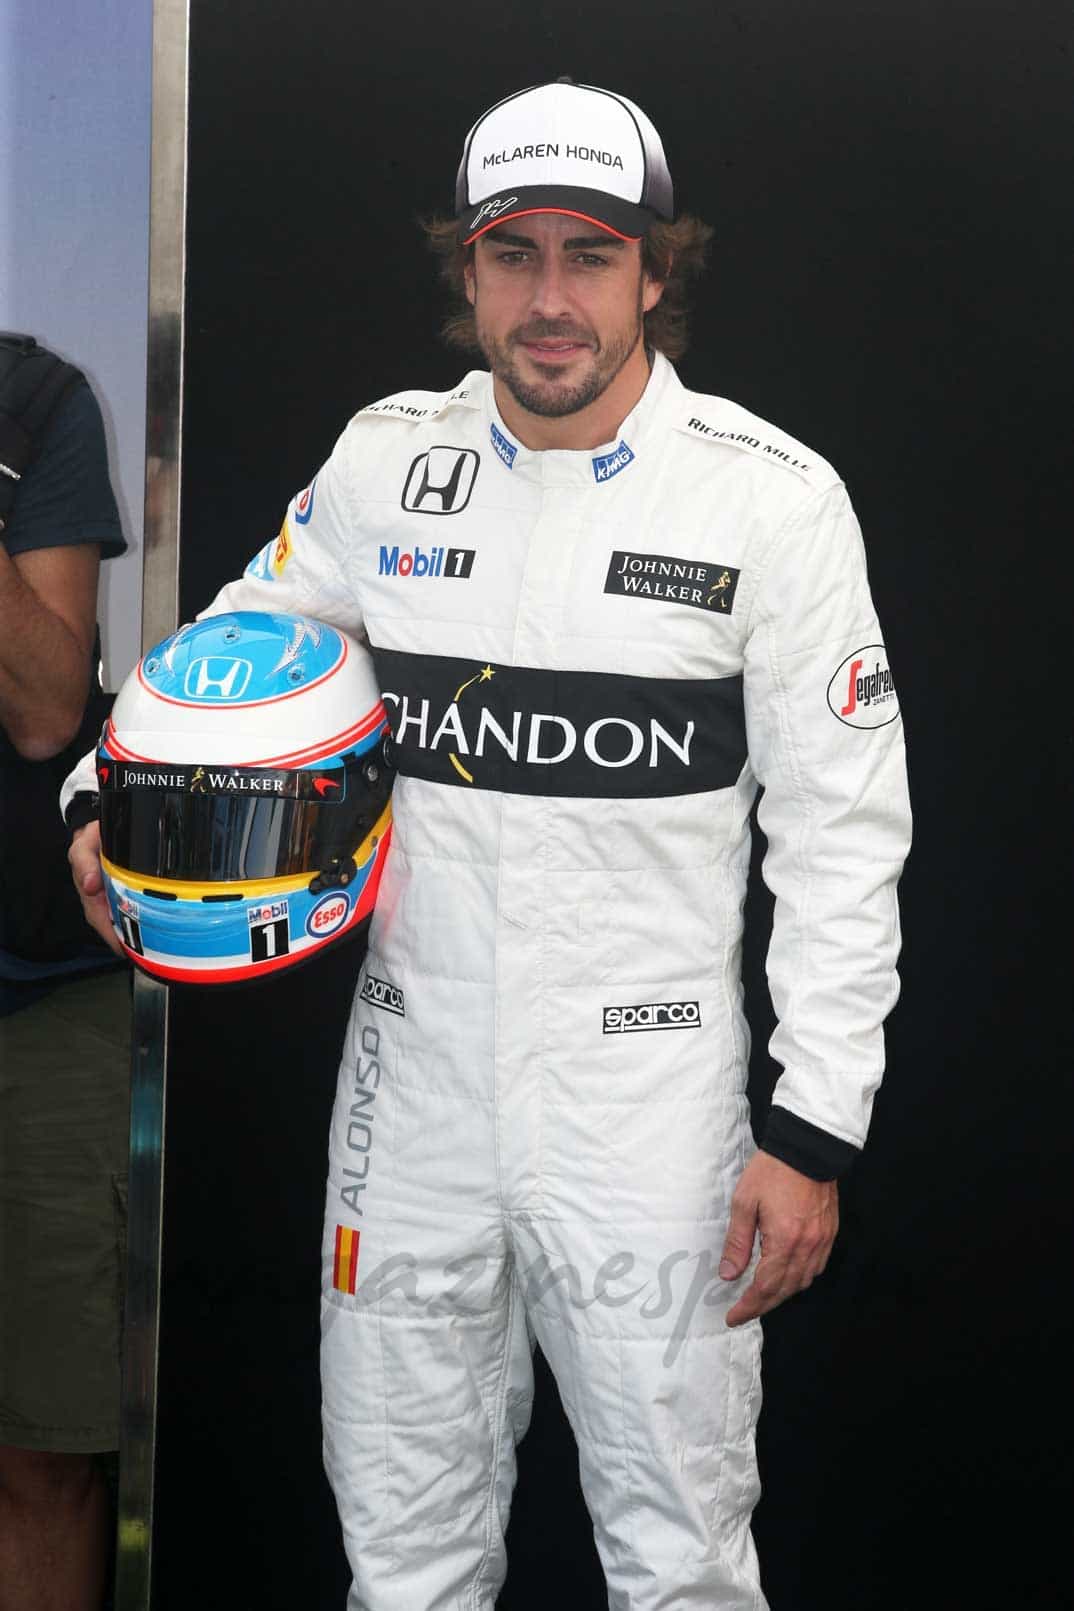 recoger Paseo hada Fernando Alonso no pierde la sonrisa - magazinespain.com